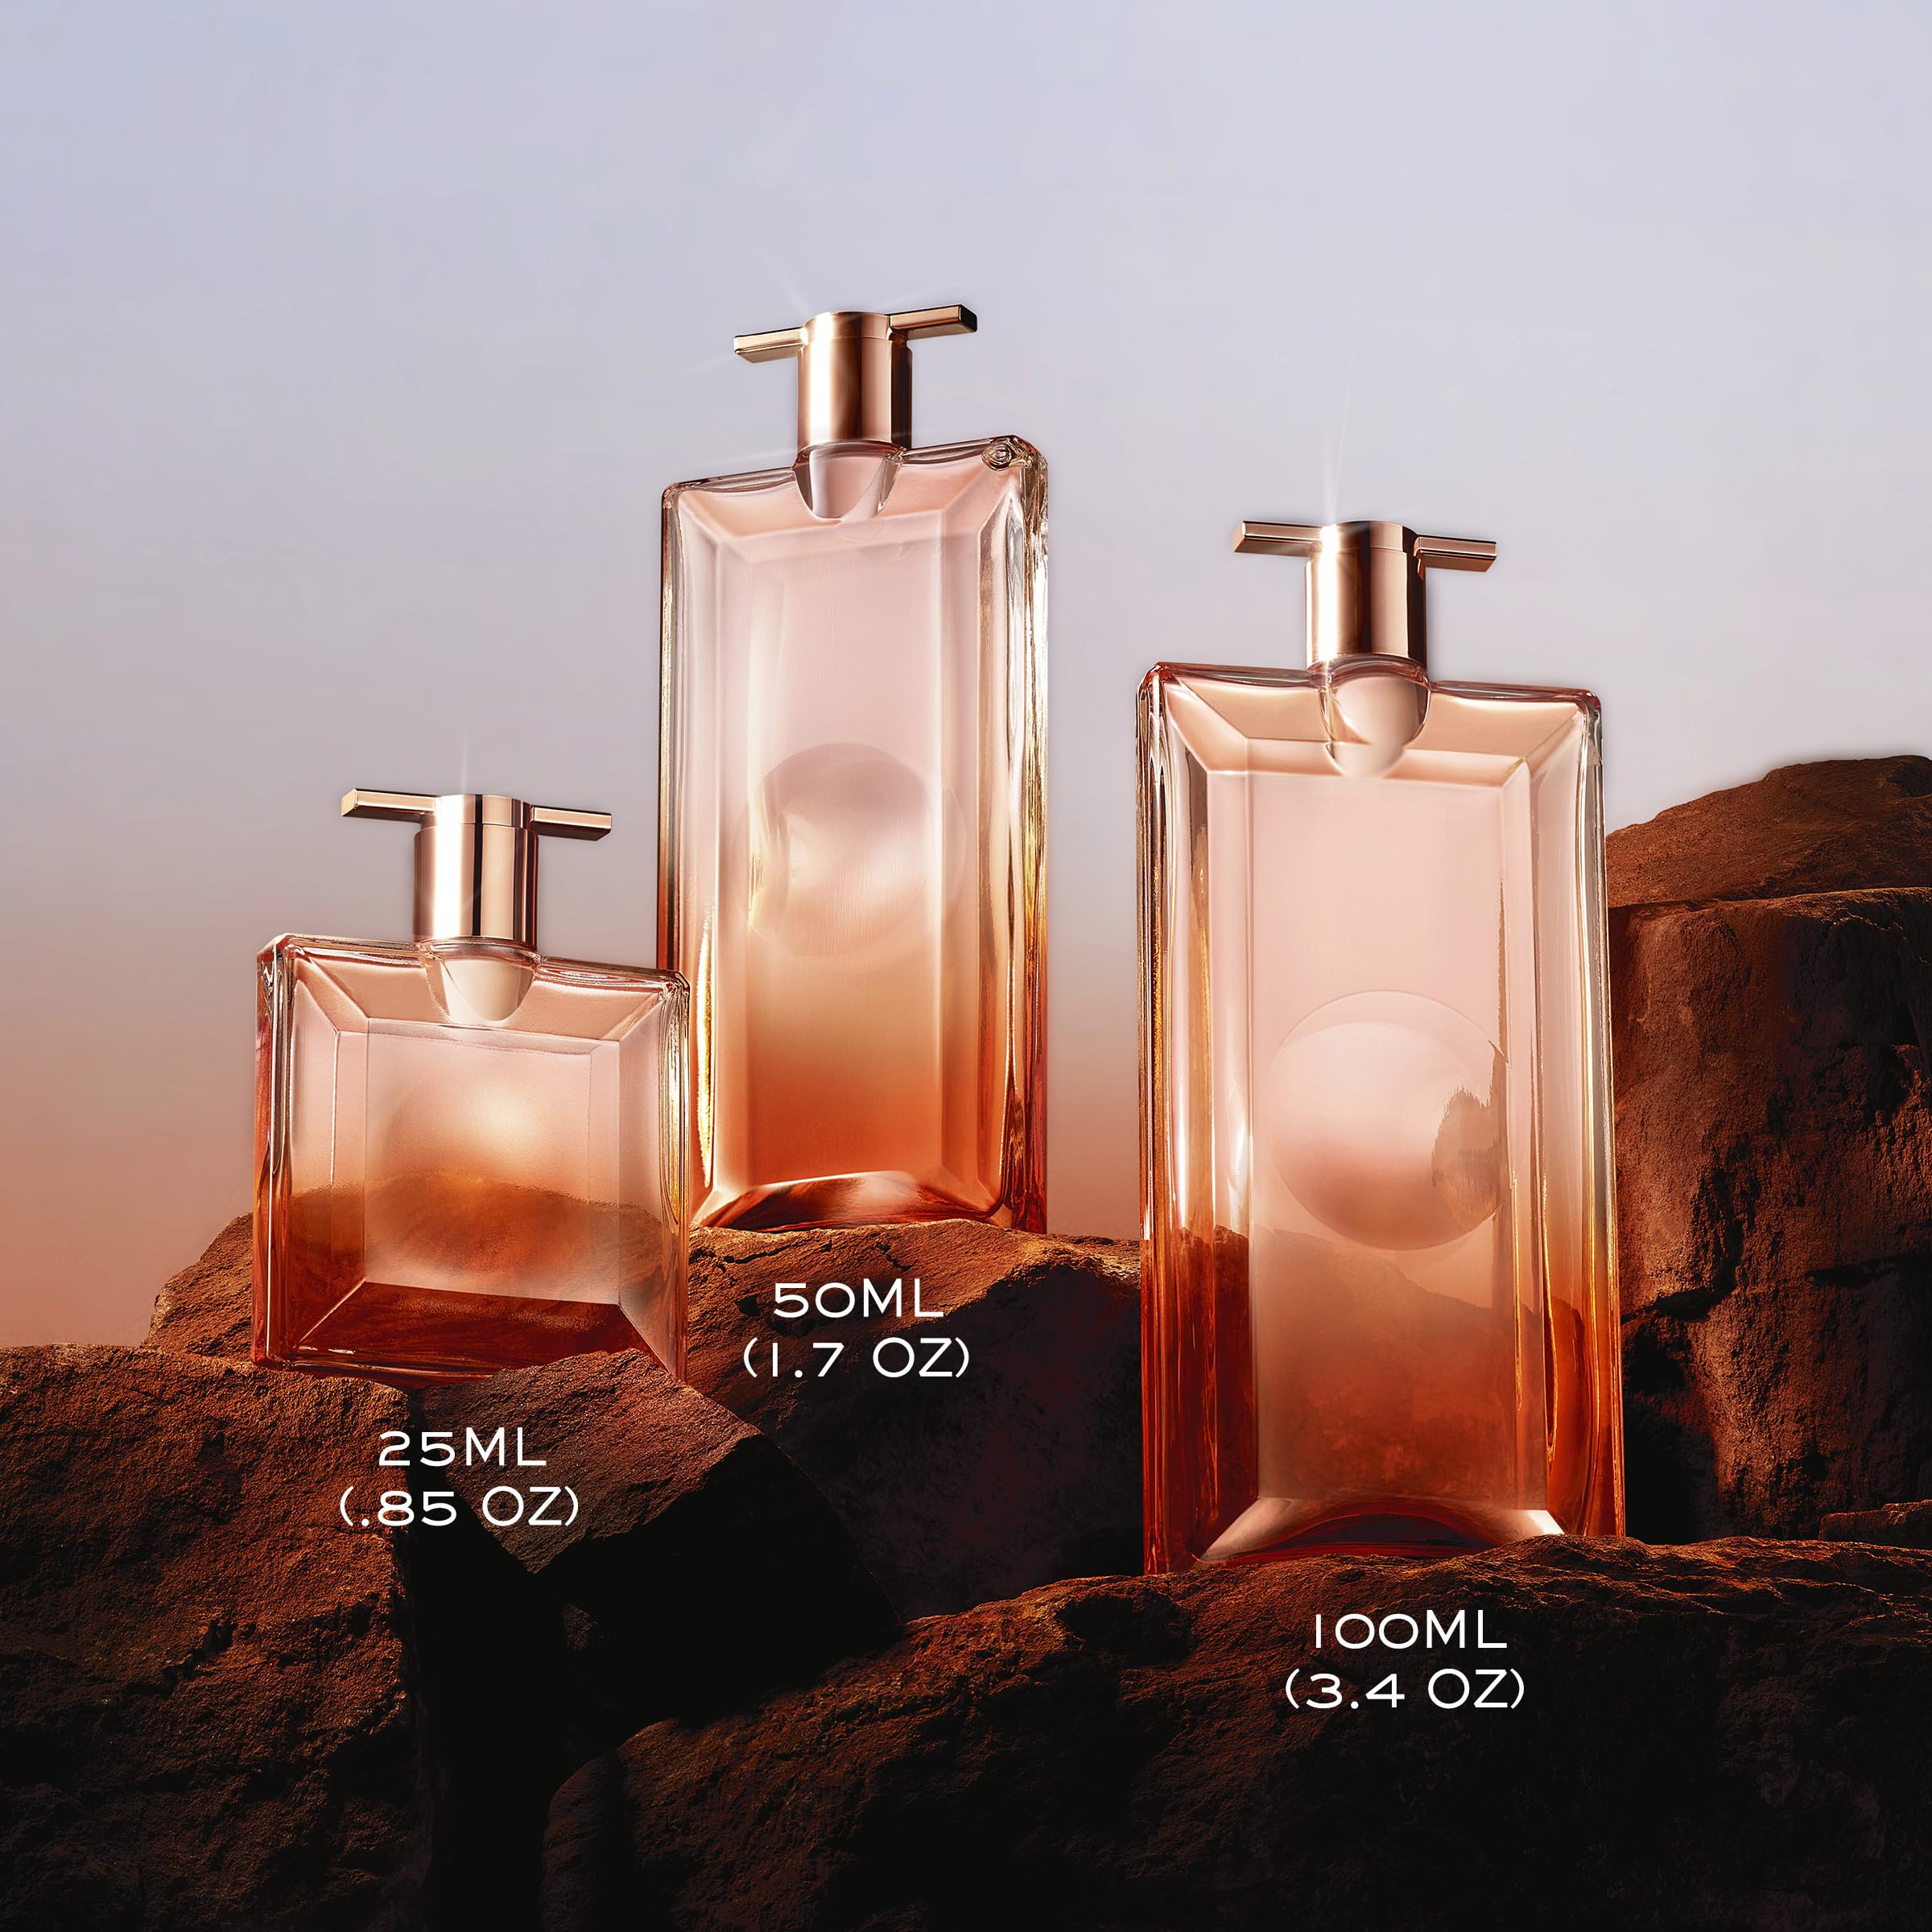 Lancôme Idôle Now Eau de Parfum - Long Lasting Fragrance with Notes of Rose, Musky Orchid Accord & Vanilla - Luminous & Floral Women's Perfume